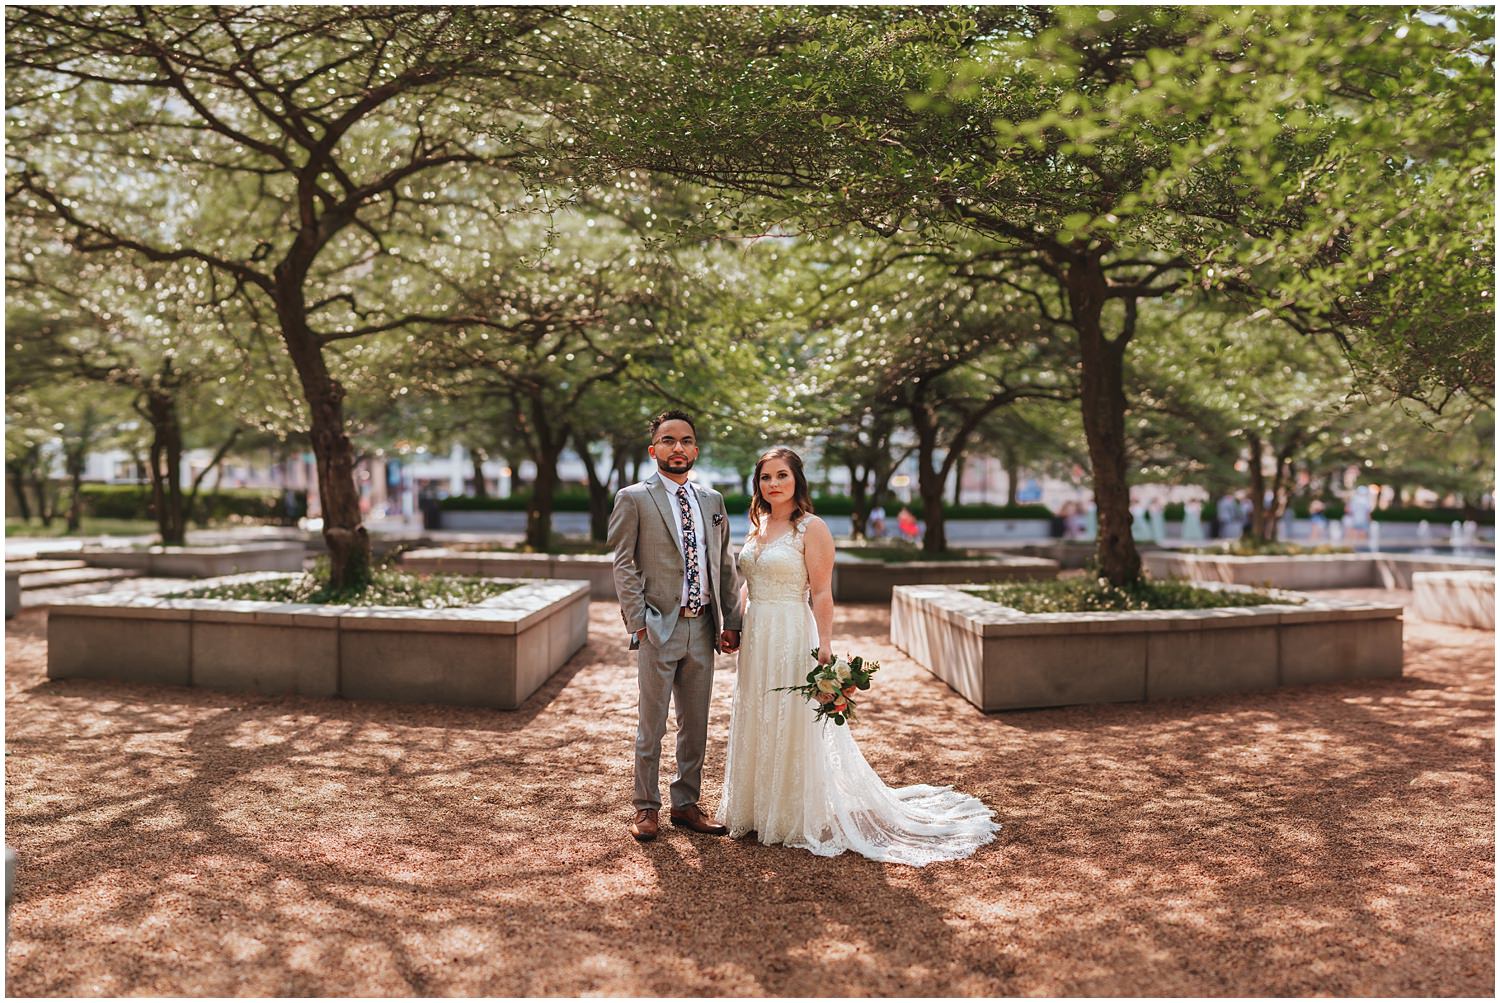 Art institute gardens Chicago, Wedding photography - bride and groom portraits